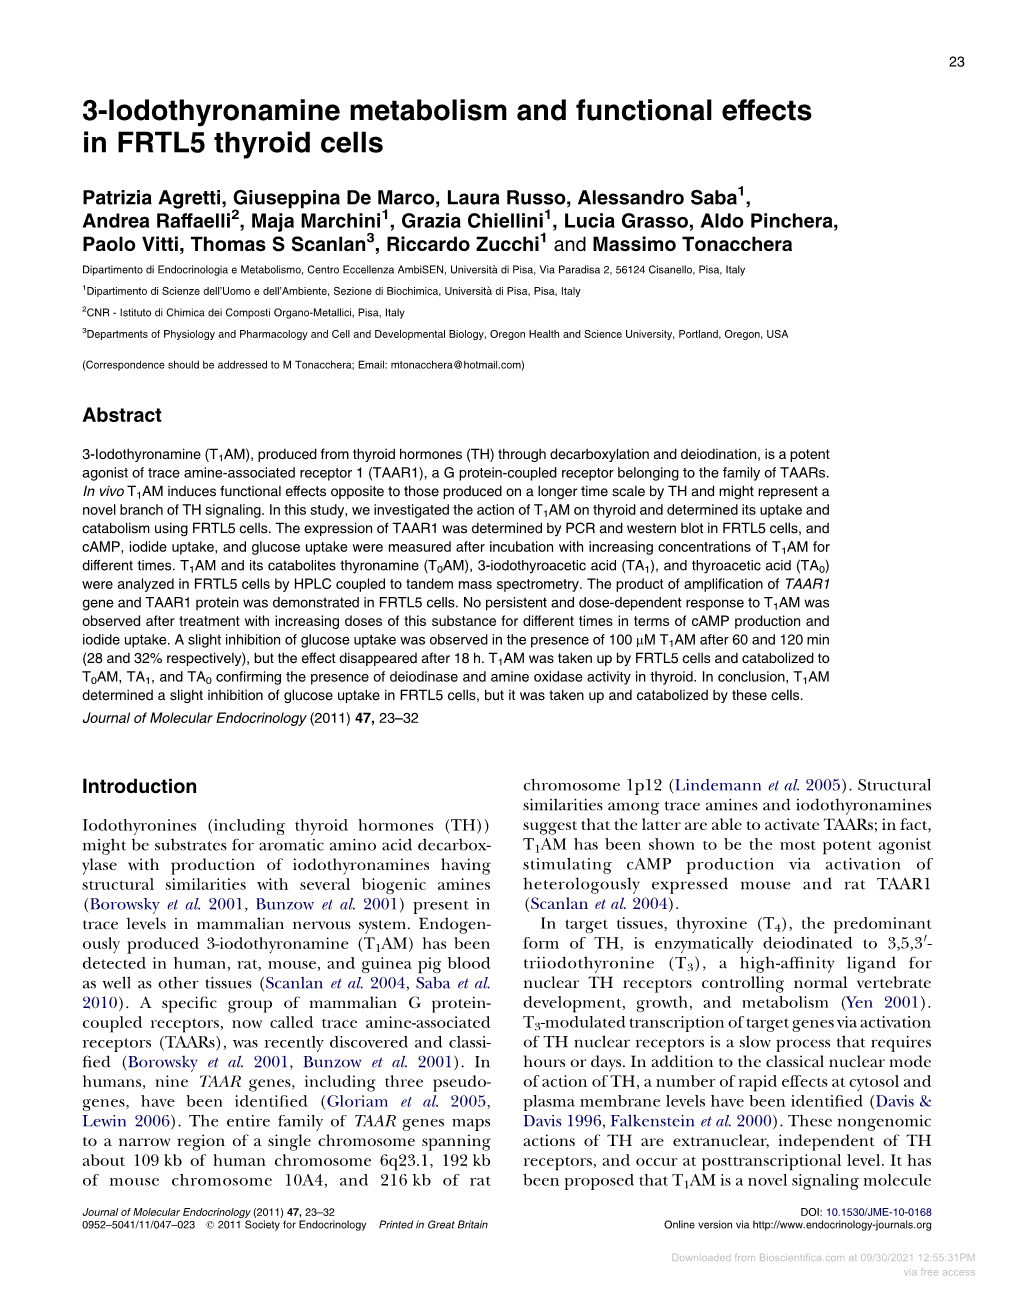 3-Iodothyronamine Metabolism and Functional Effects in FRTL5 Thyroid Cells